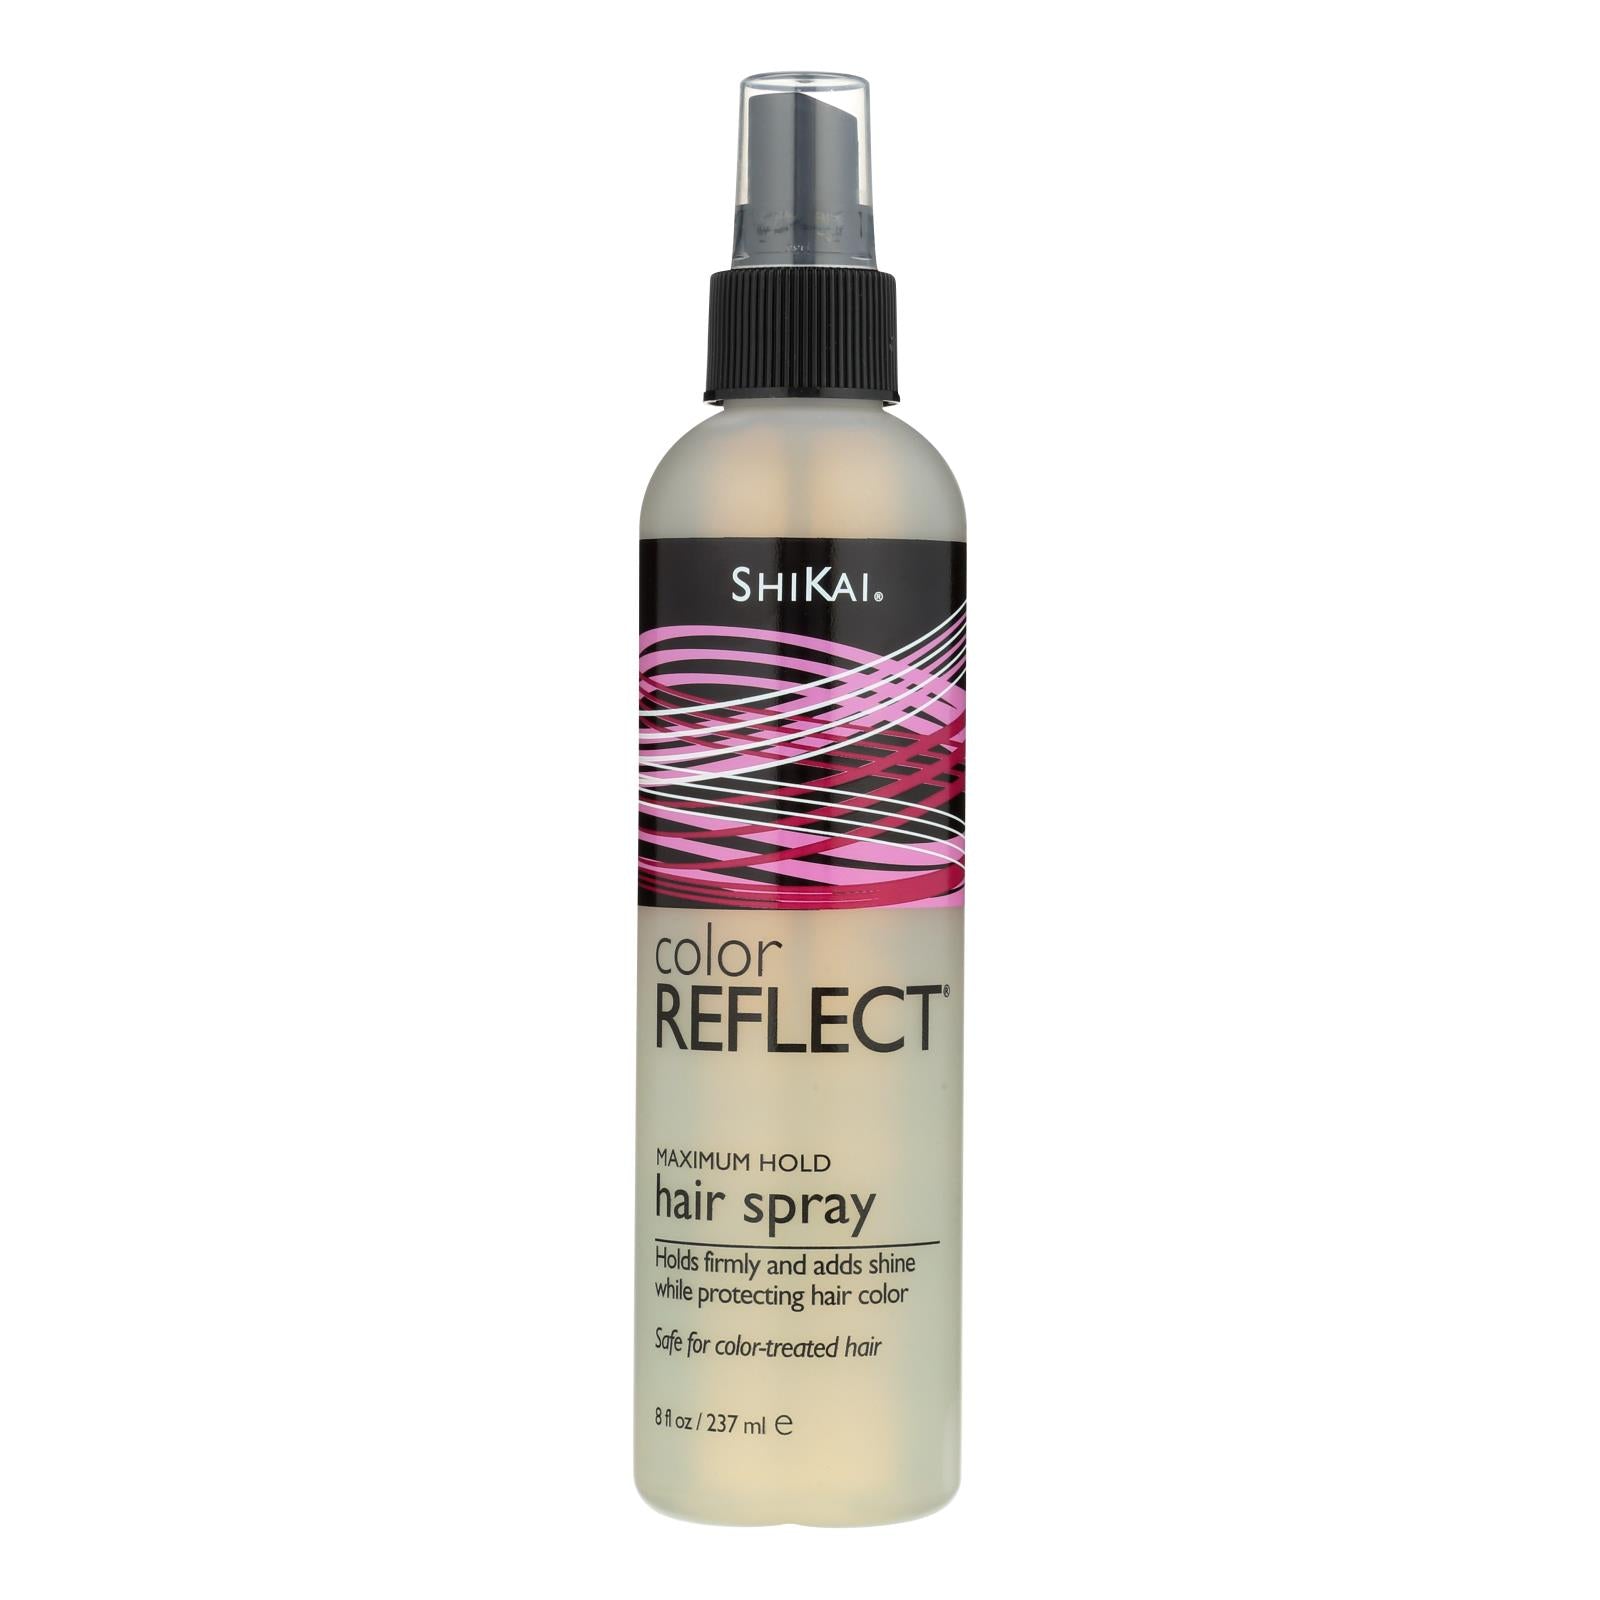 Shikai Color Reflect Color Lock Hair Spray - 8 Fl Oz